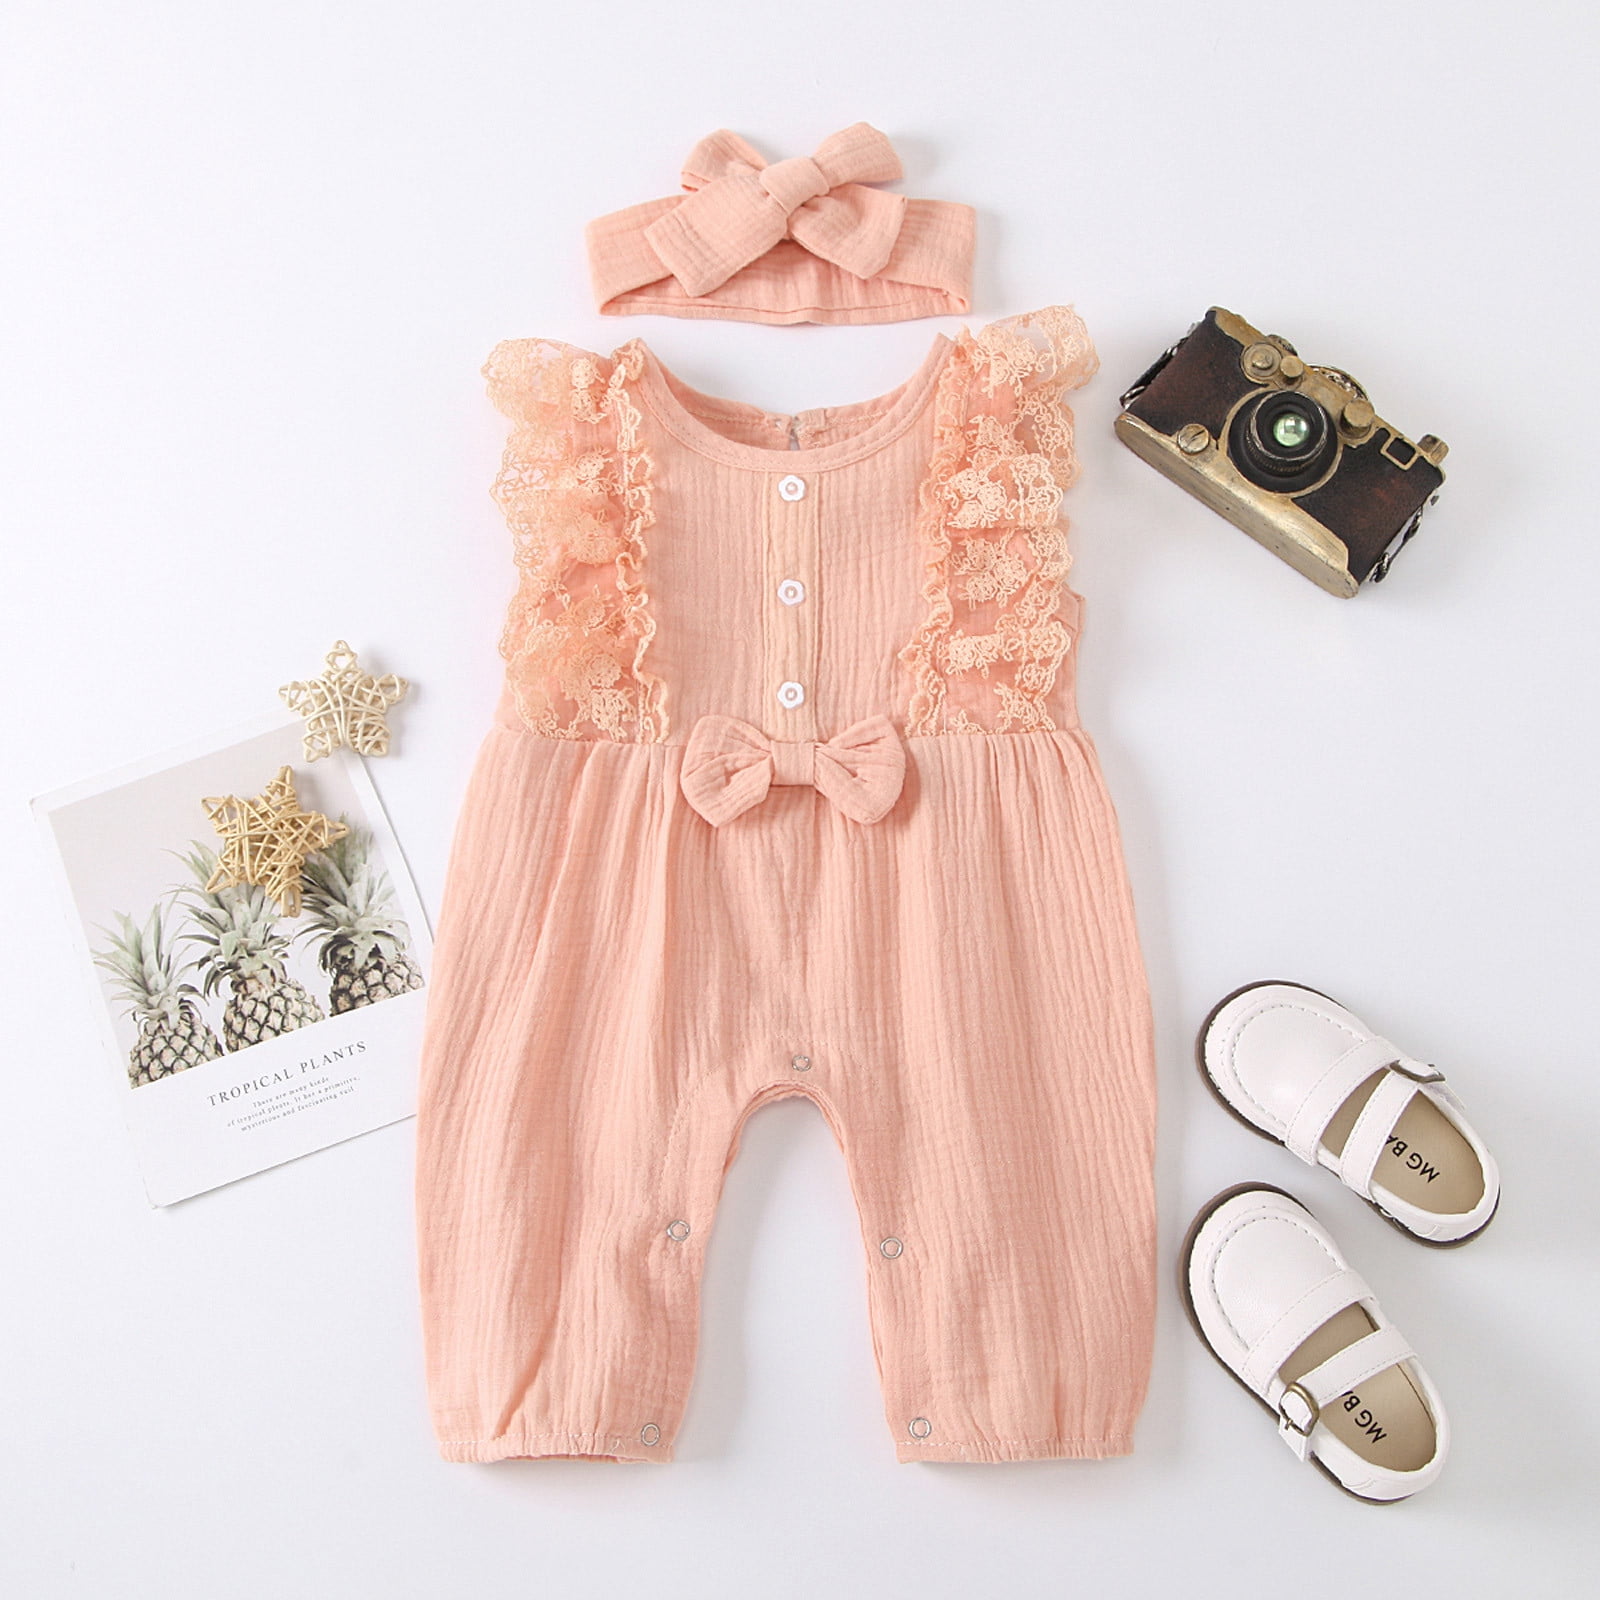 Newborn Infant Baby Girl Cotton Linen Romper Lace Bow One Piece Jumpsuit Clothes 